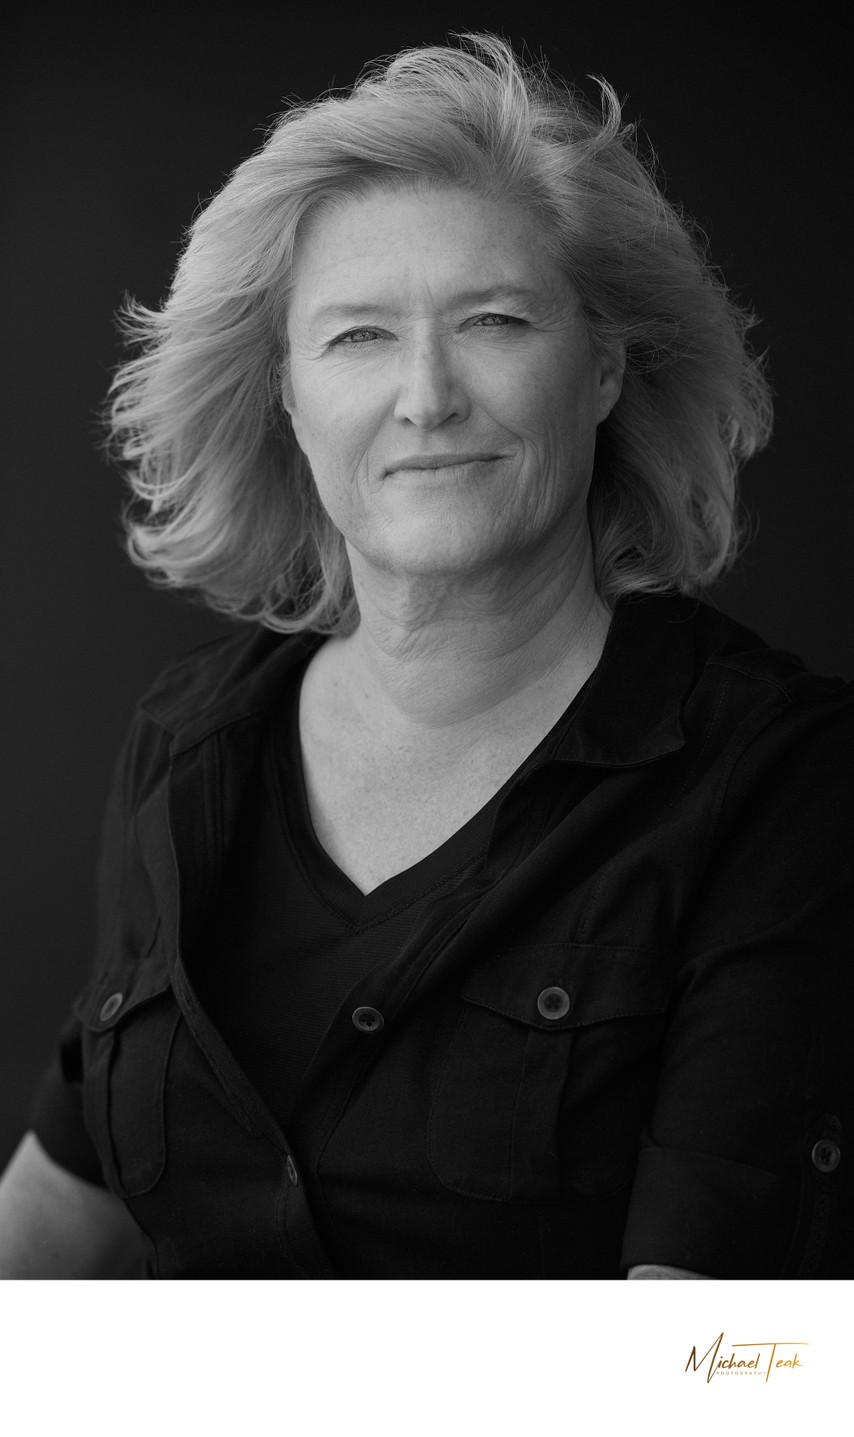 Denver - Boulder headshot of author, black and white